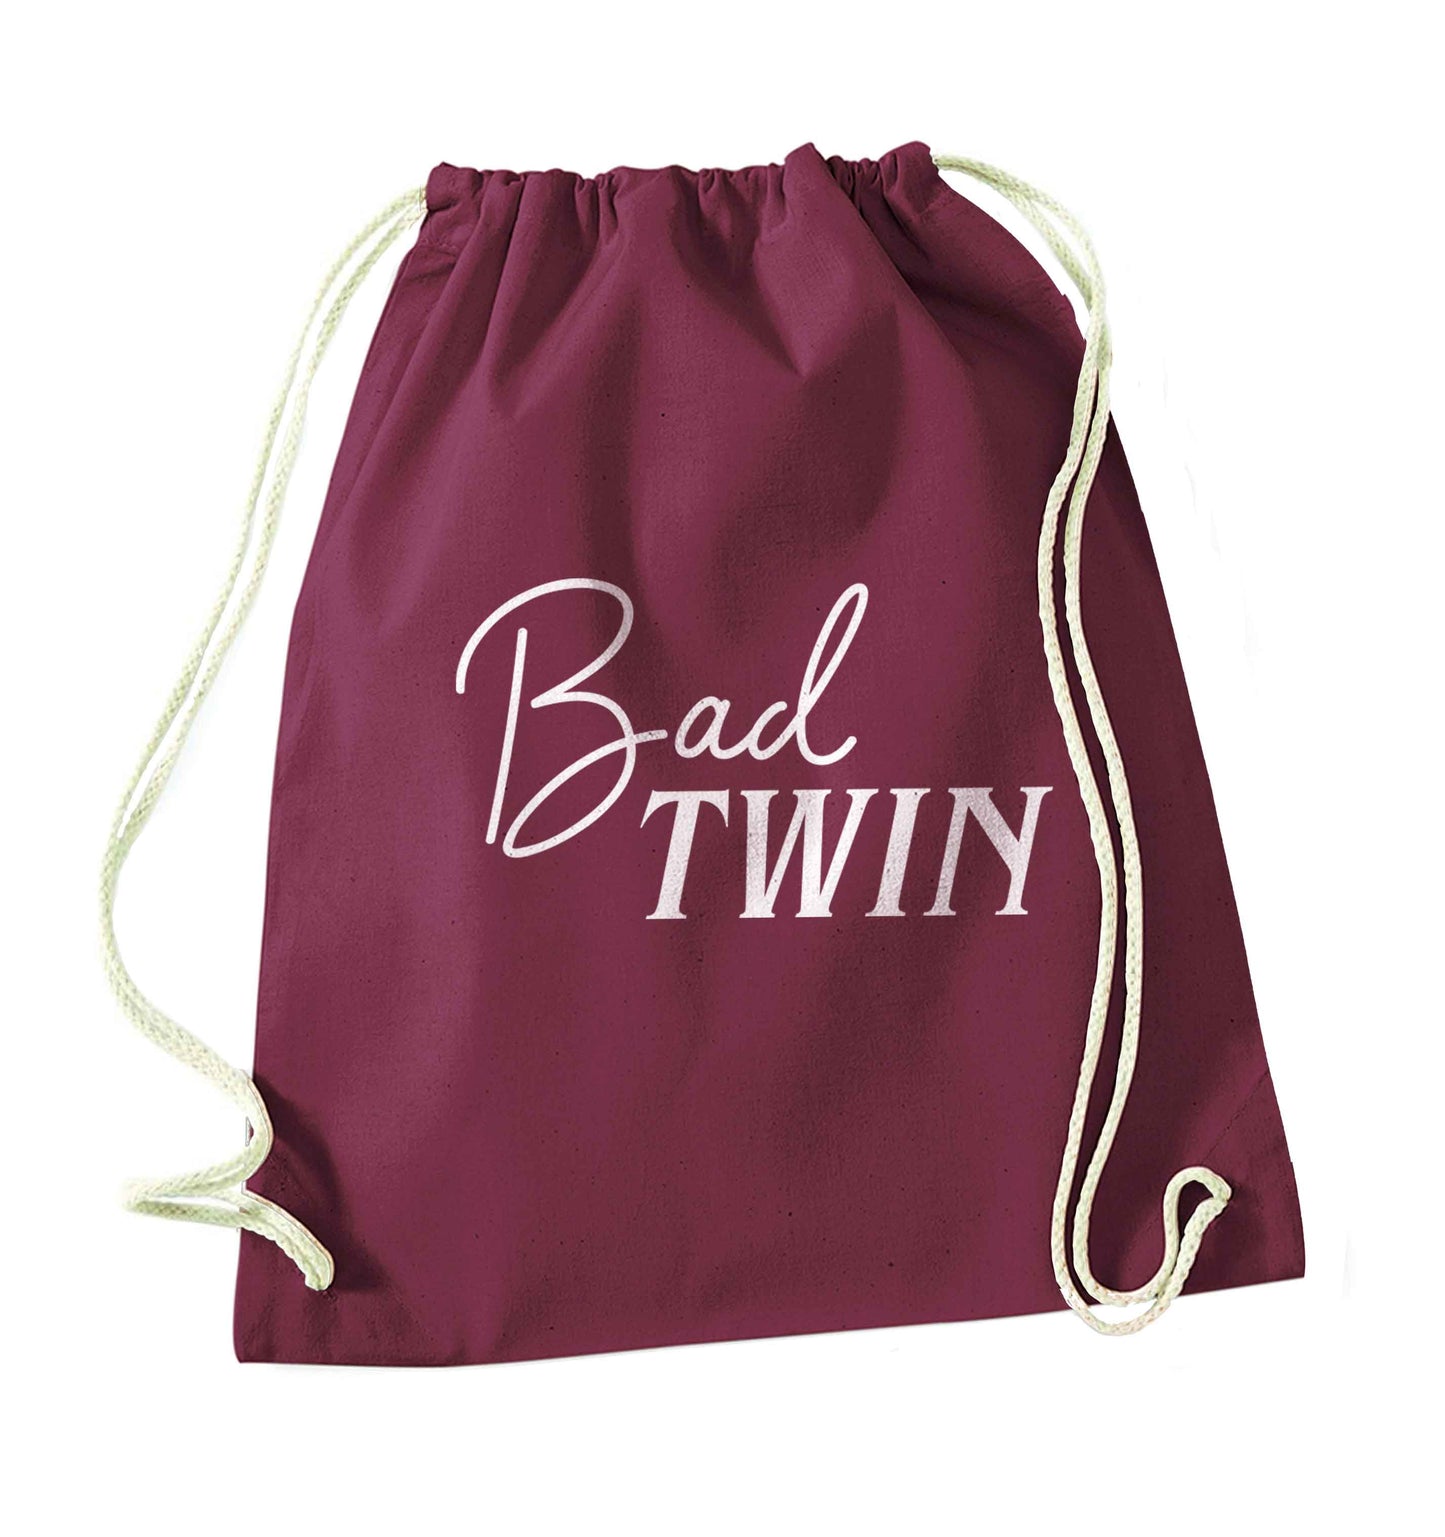 Bad twin maroon drawstring bag